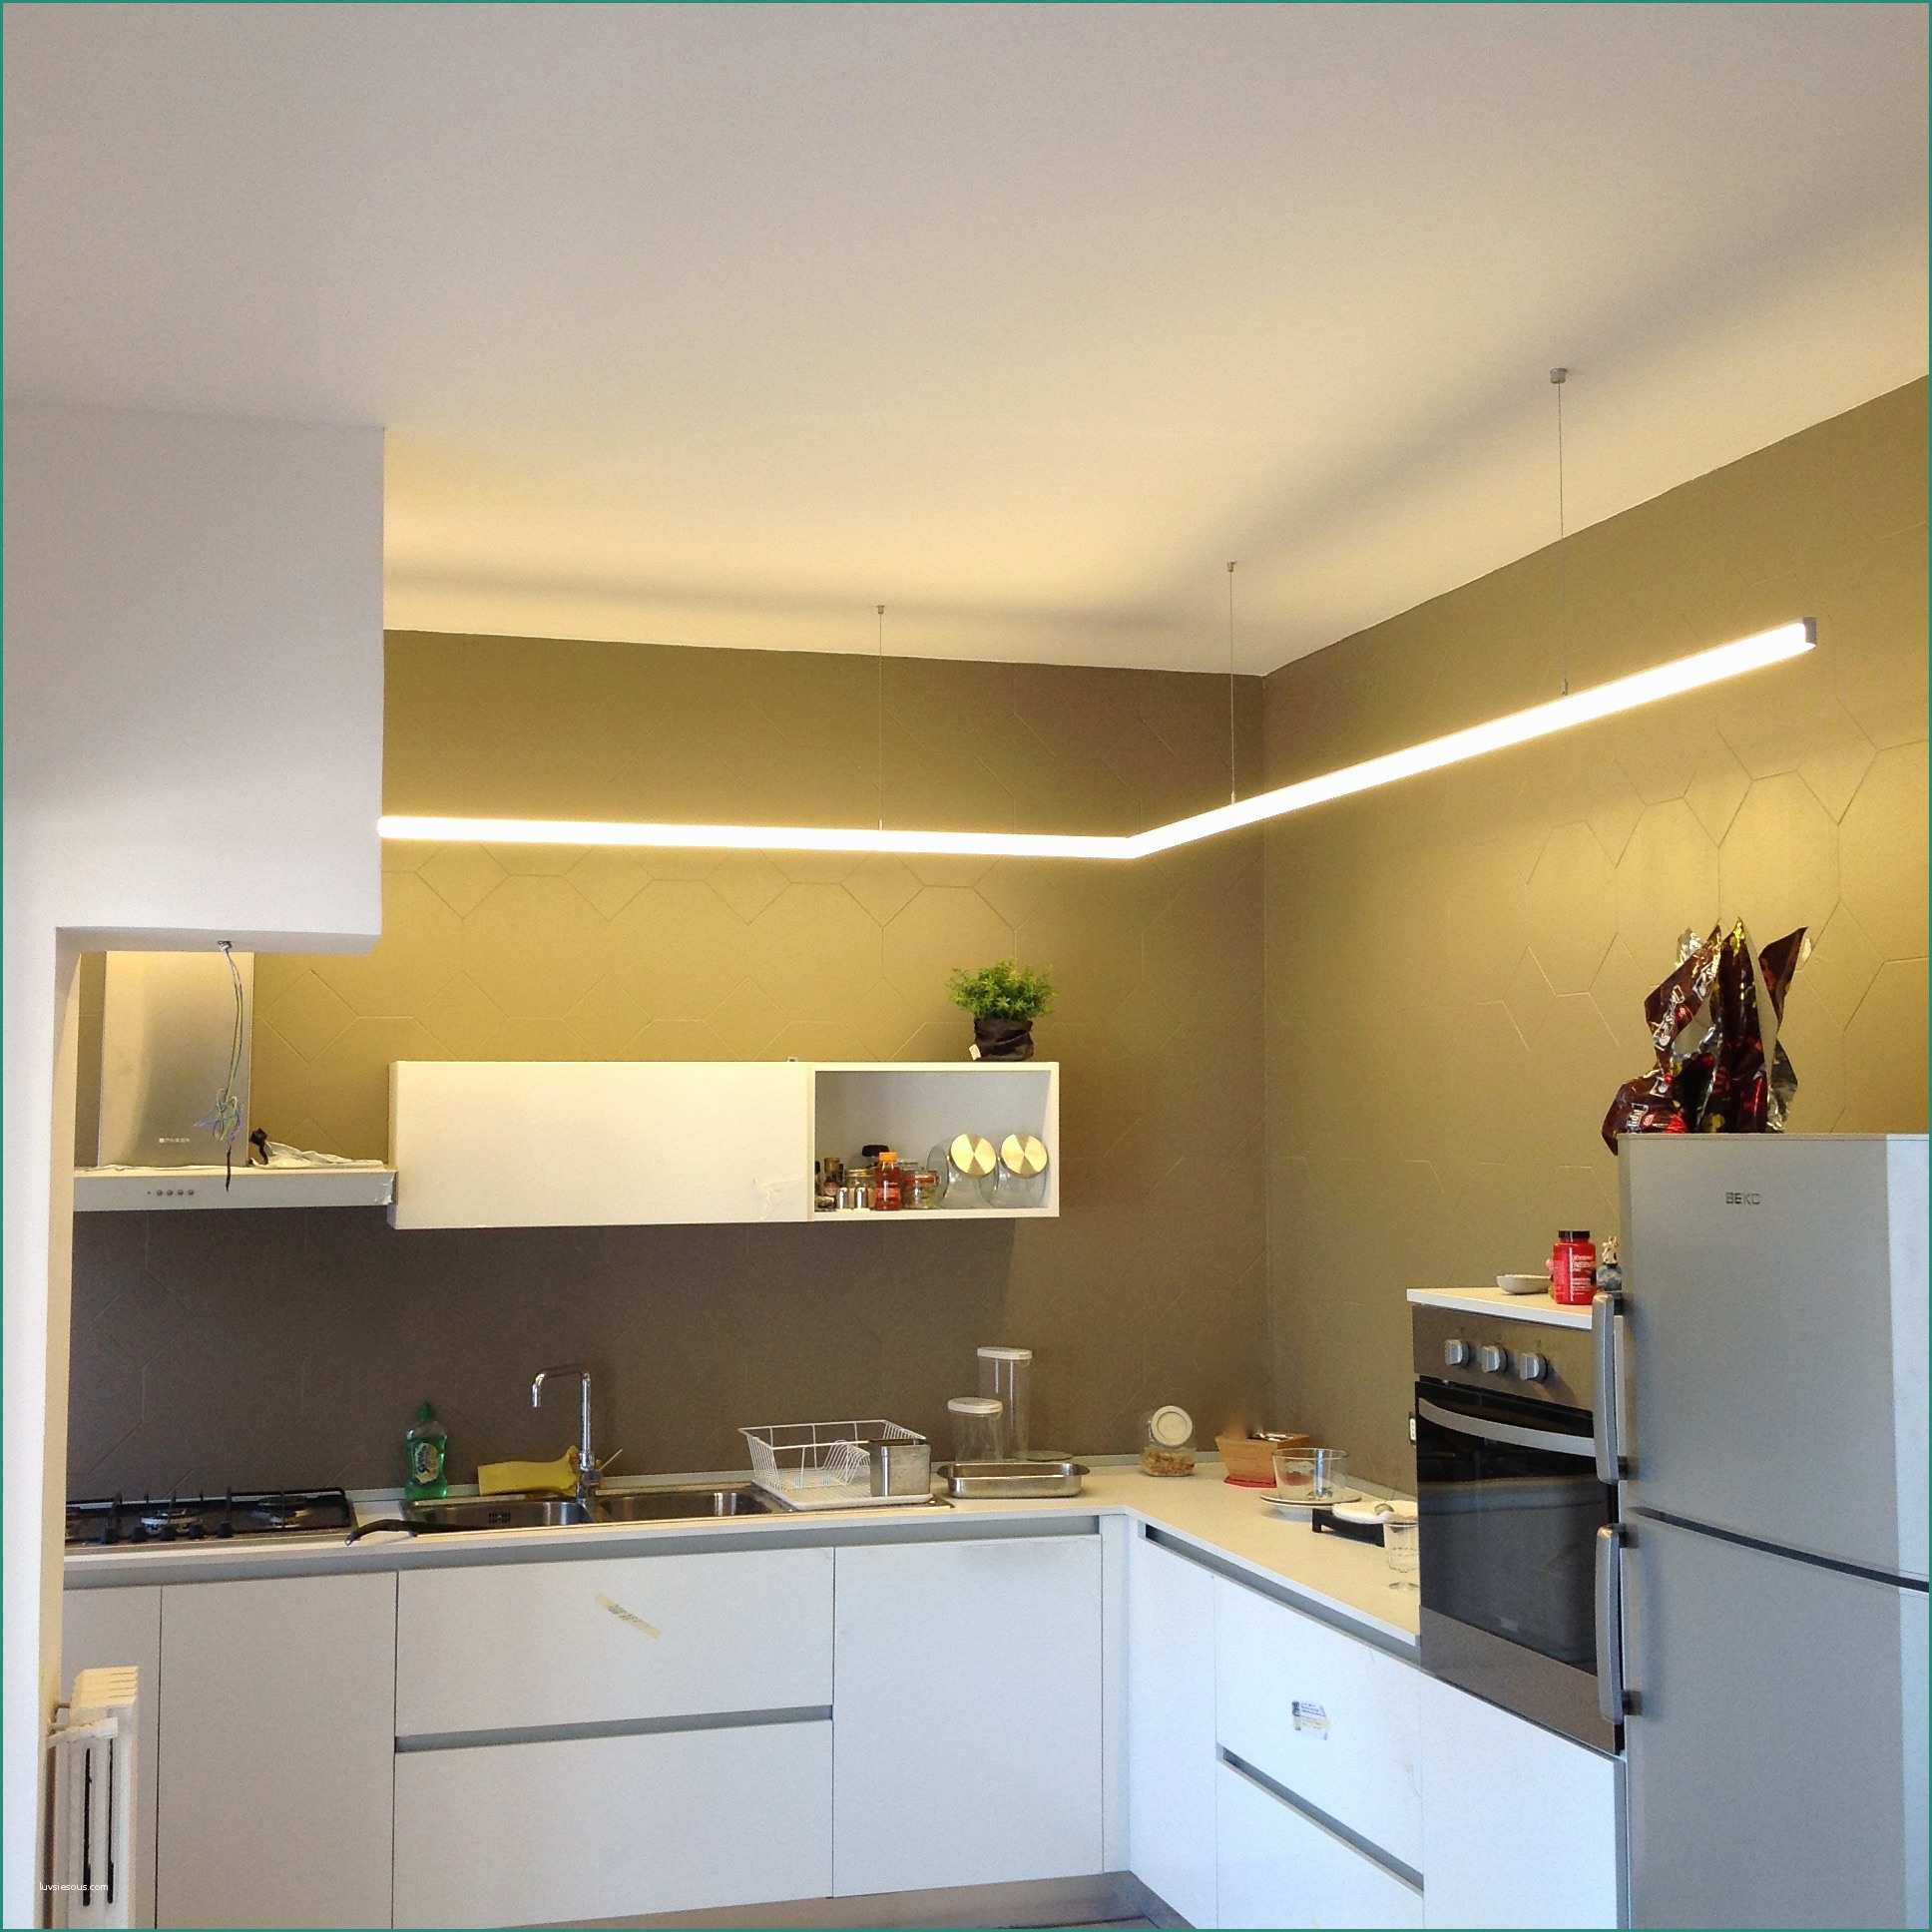 Illuminazione Casa Moderna E Lampadari Luce Led – Idea Immagine Home